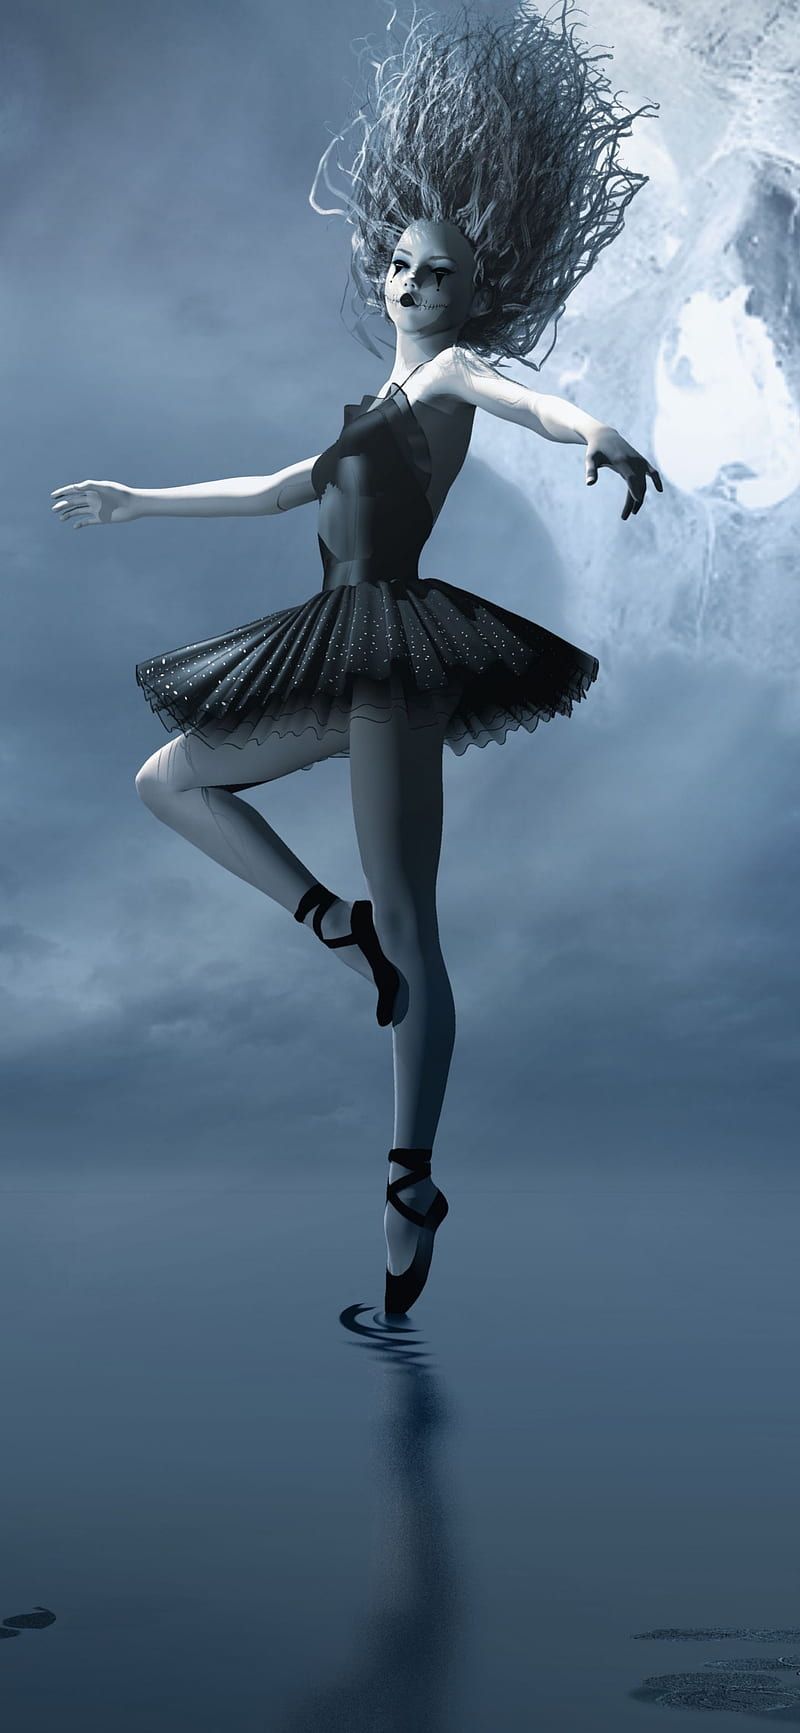 A ballerina in a black dress dances in the water. - Dance, ballet